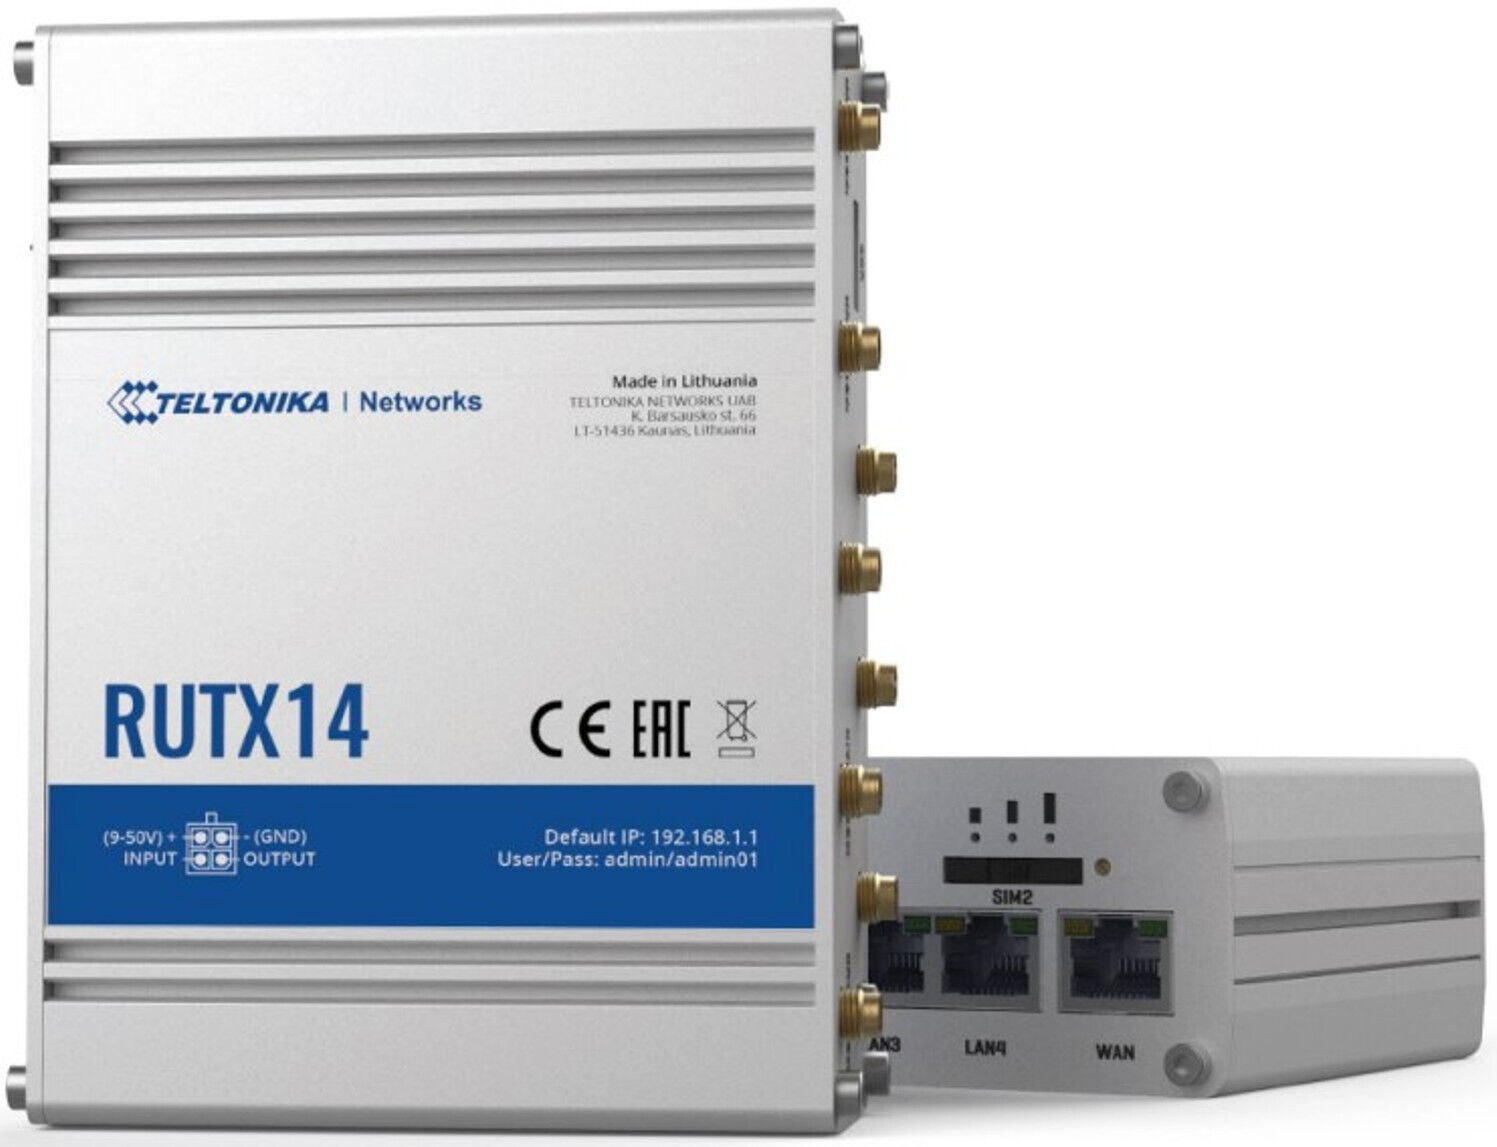 Teltonika RUTX14 000000 Industrial Cellular Router, 4G LTE CAR12